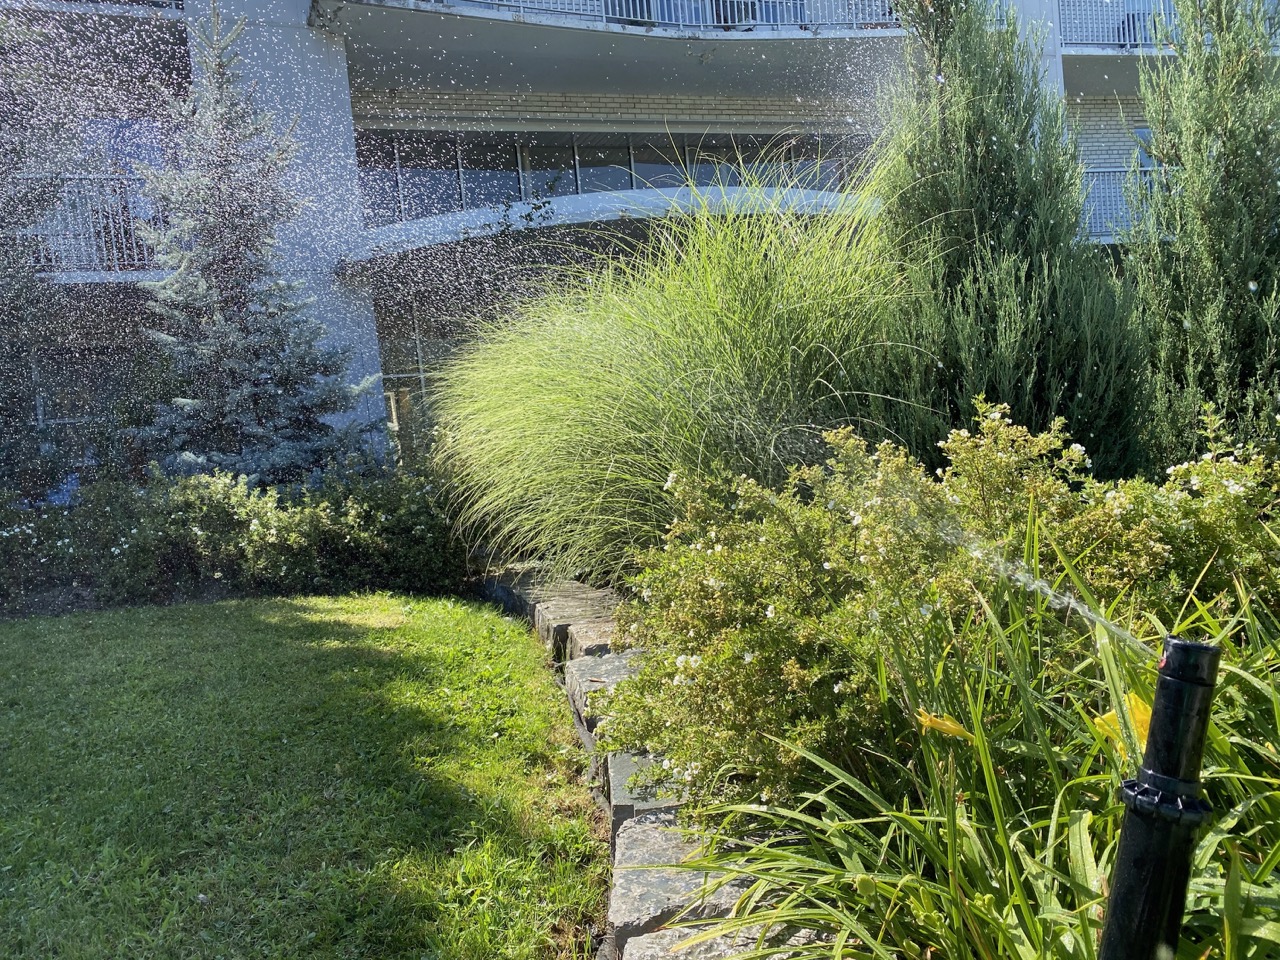 Winter Lawn Watering Tips​